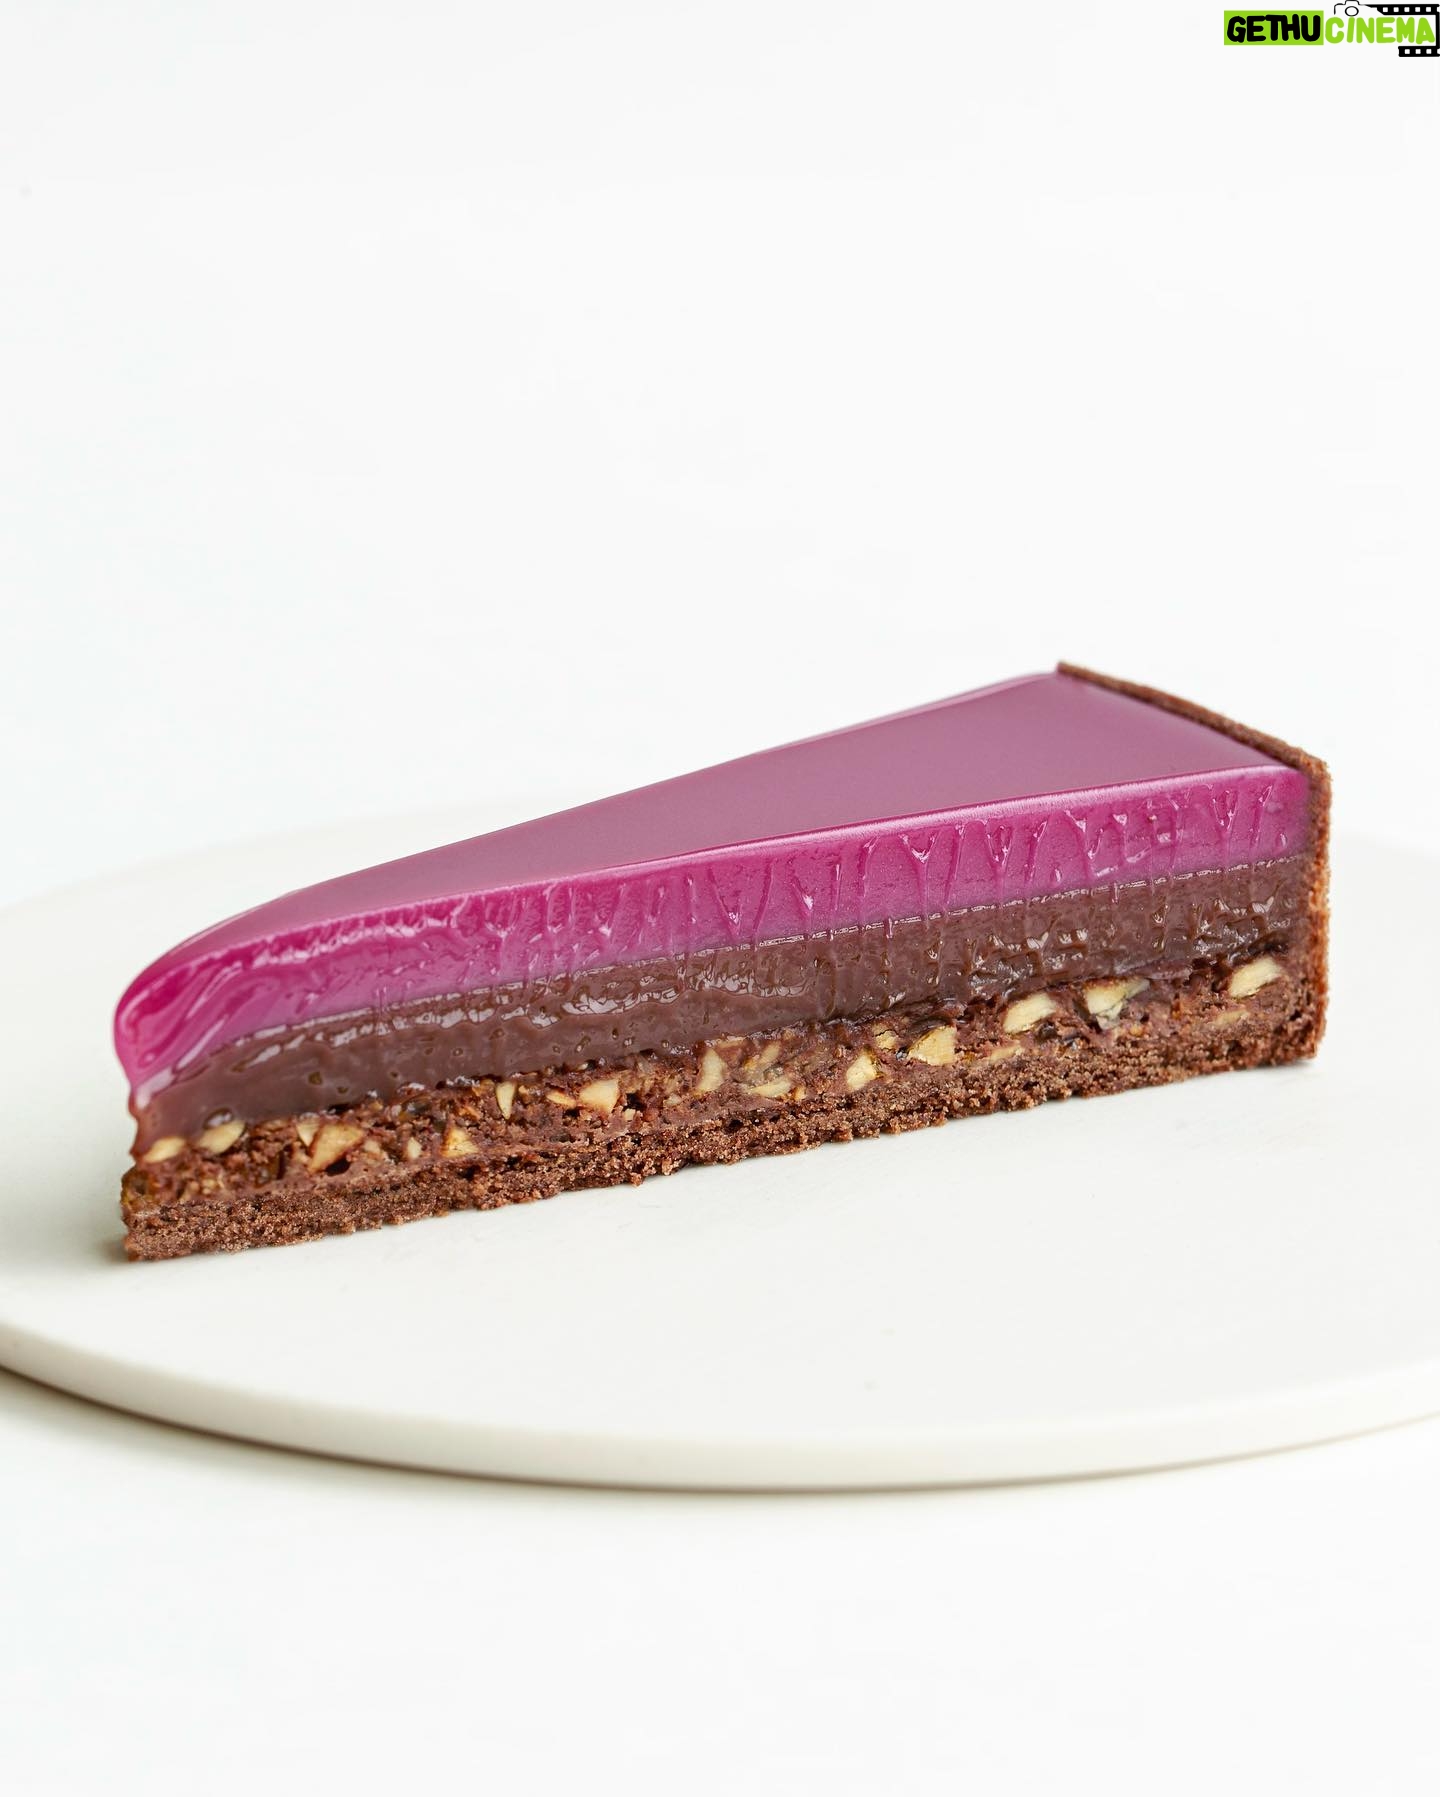 Maja Vase Instagram – Blackberry hazelnut chocolate tart 💘 My kind of ...